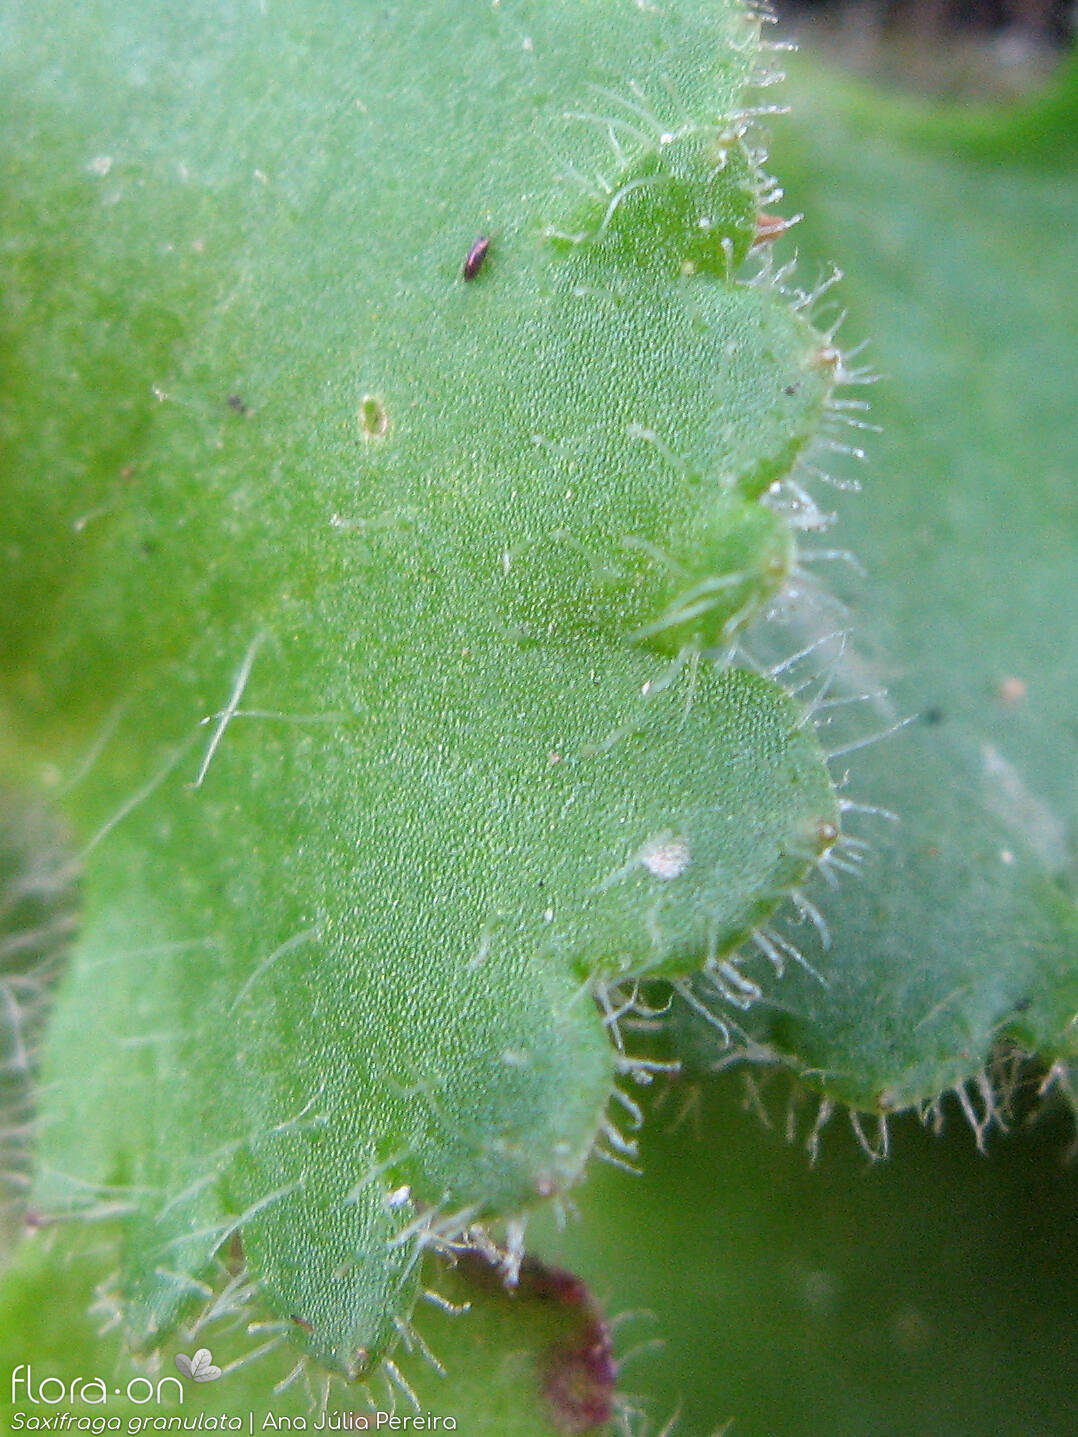 Saxifraga granulata - Folha | Ana Júlia Pereira; CC BY-NC 4.0